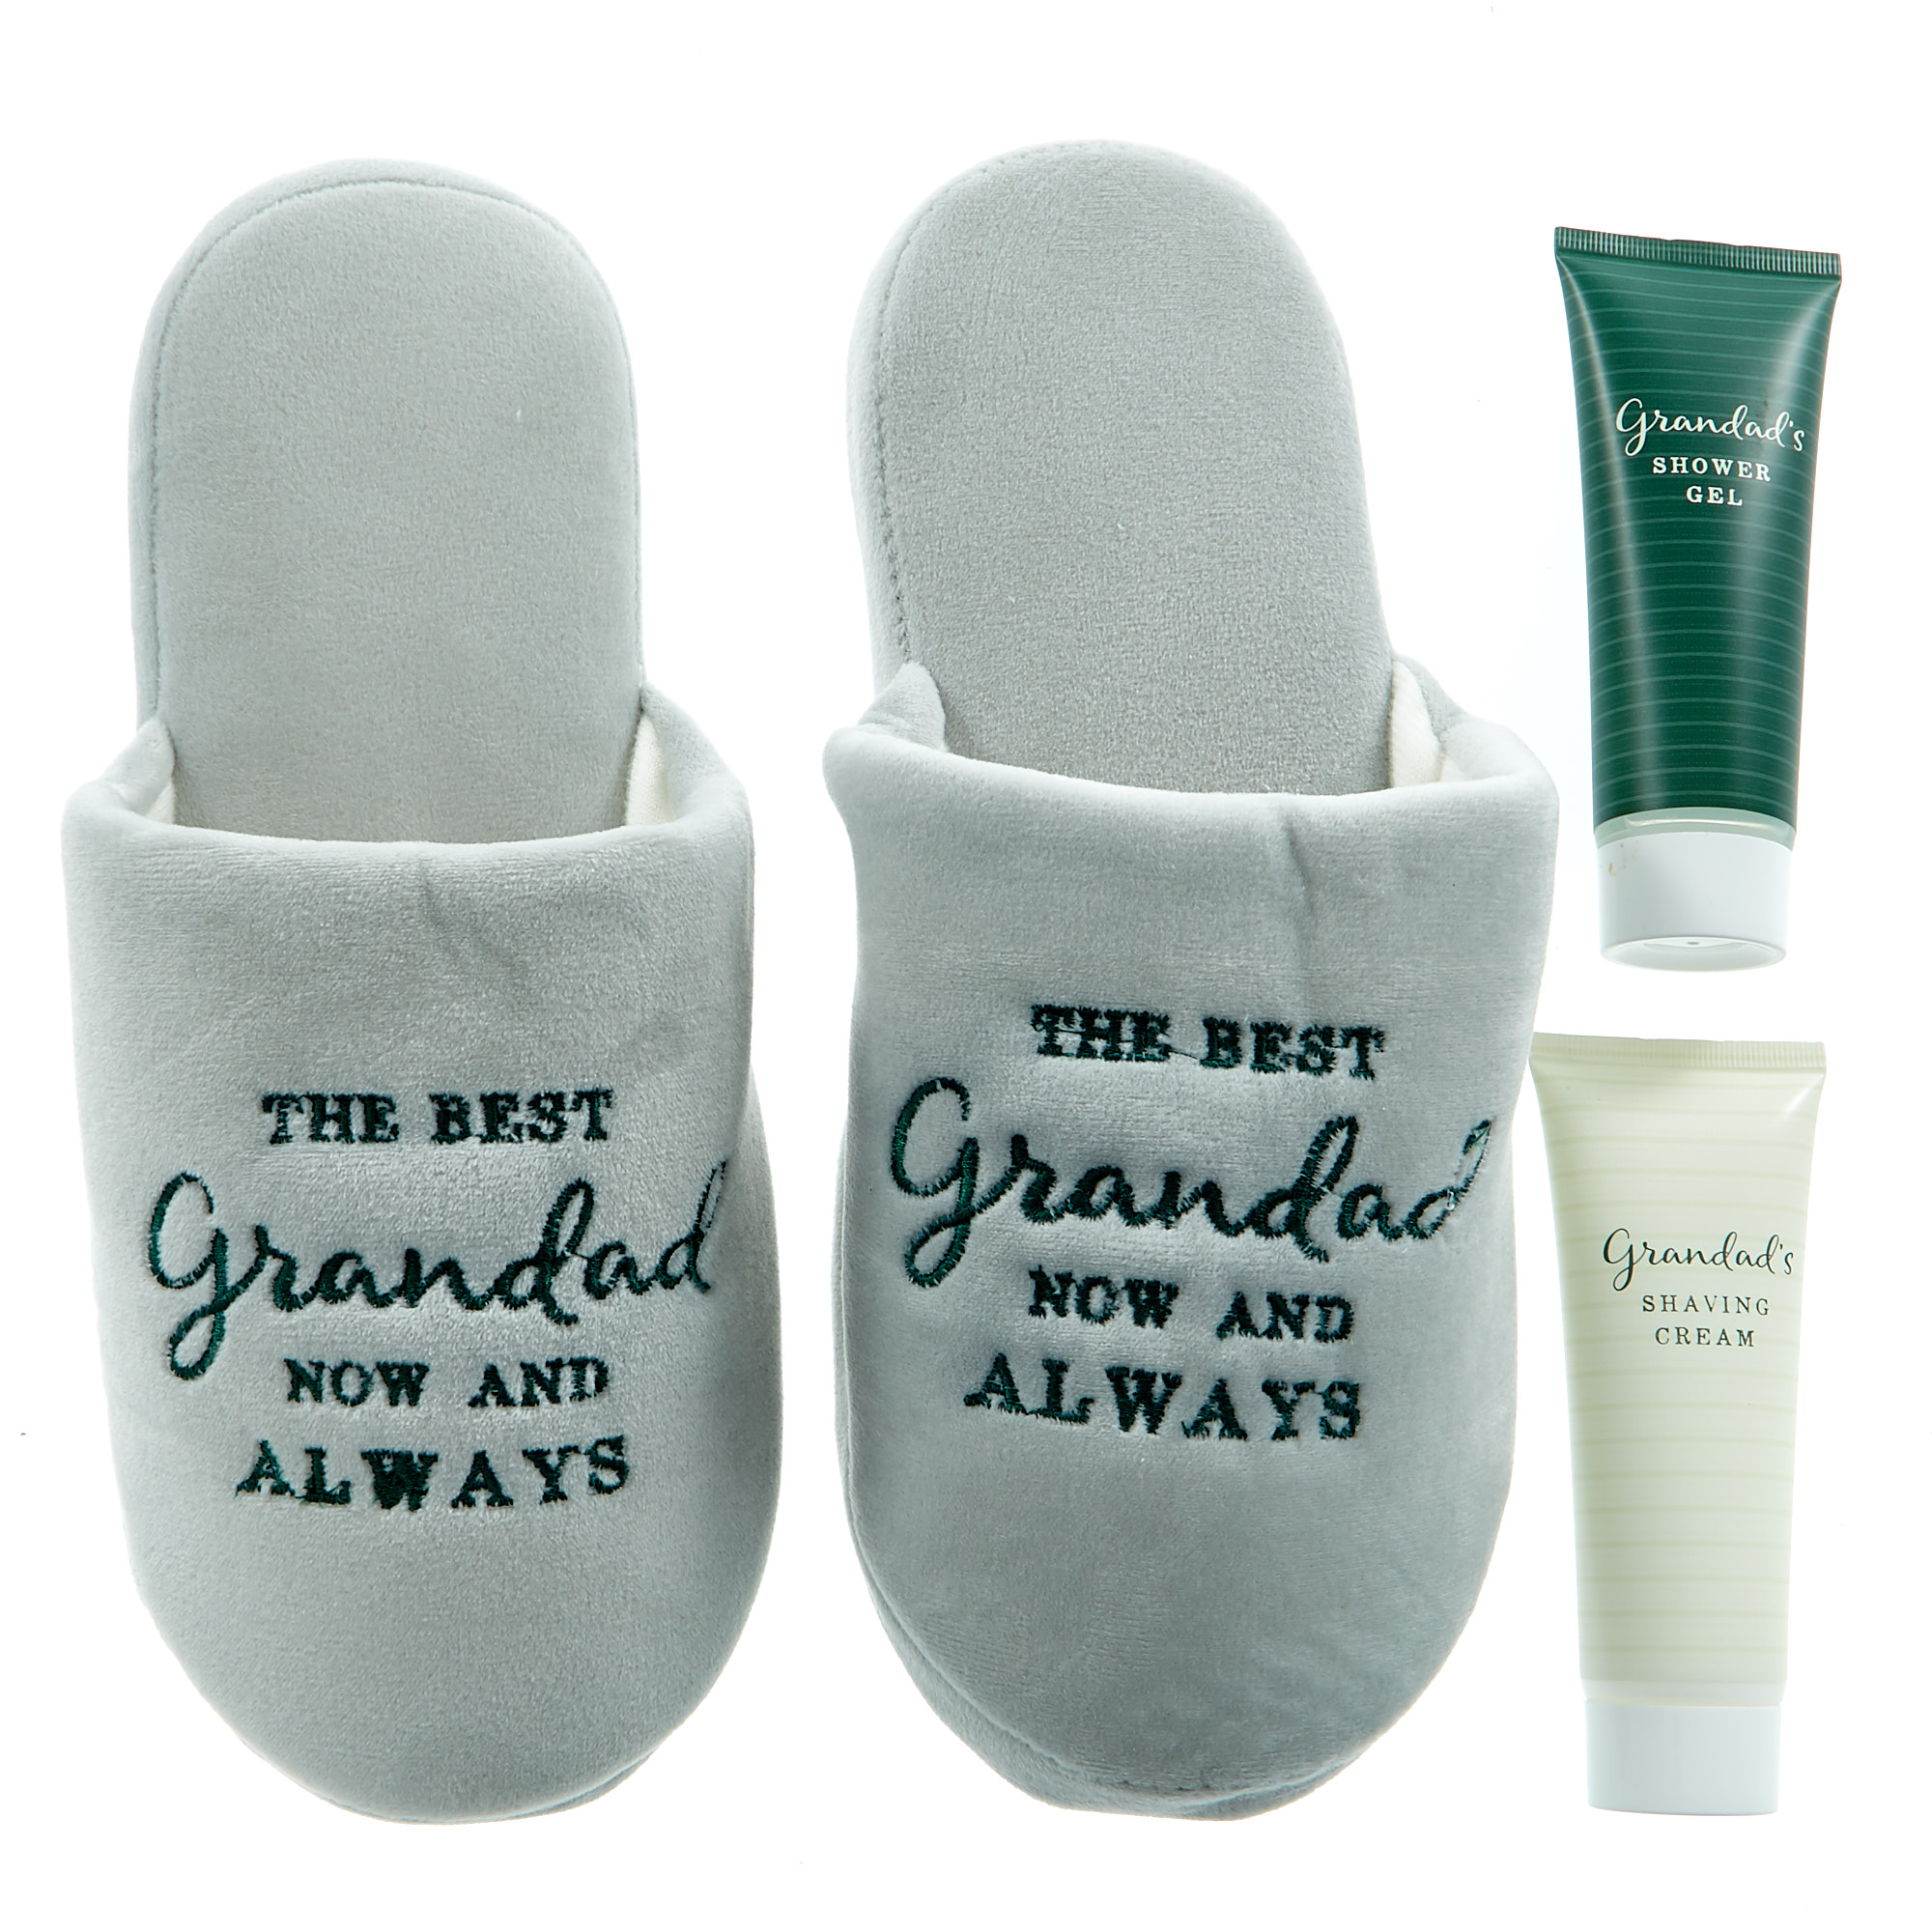 Grandad's Slippers & Toiletries Set - Size 8-9